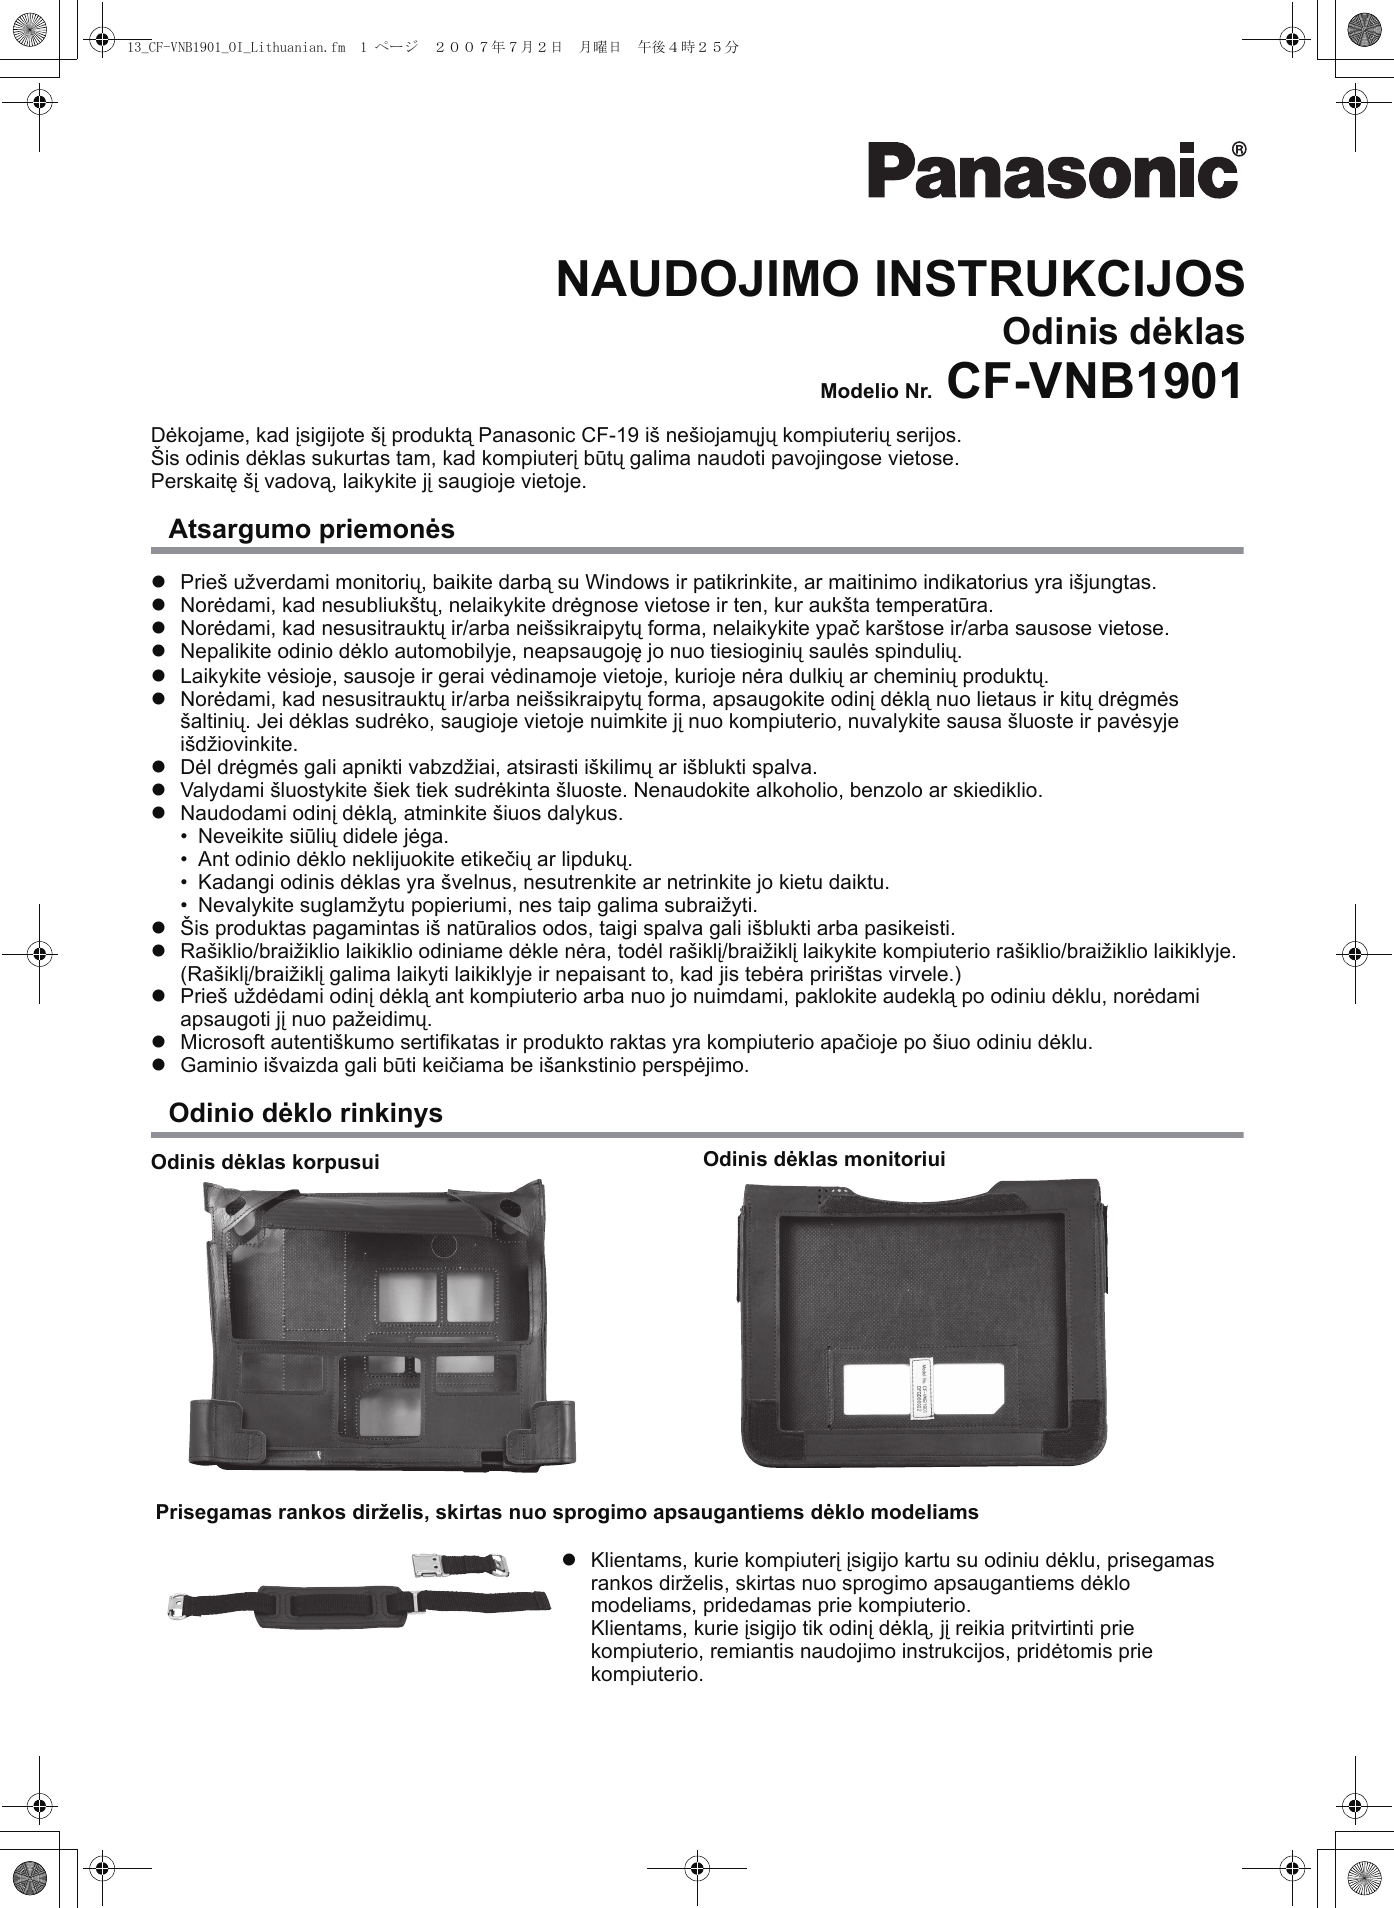 Page 1 of 4 - Panasonic CF-VNBxxxx (Leather Case) NAUDOJIMO INSTRUKCIJOS User Manual : Operating Instructions (Lithuanian) VNB1901-oi-cpe01611za-non-nonlogo-LT-p20070494